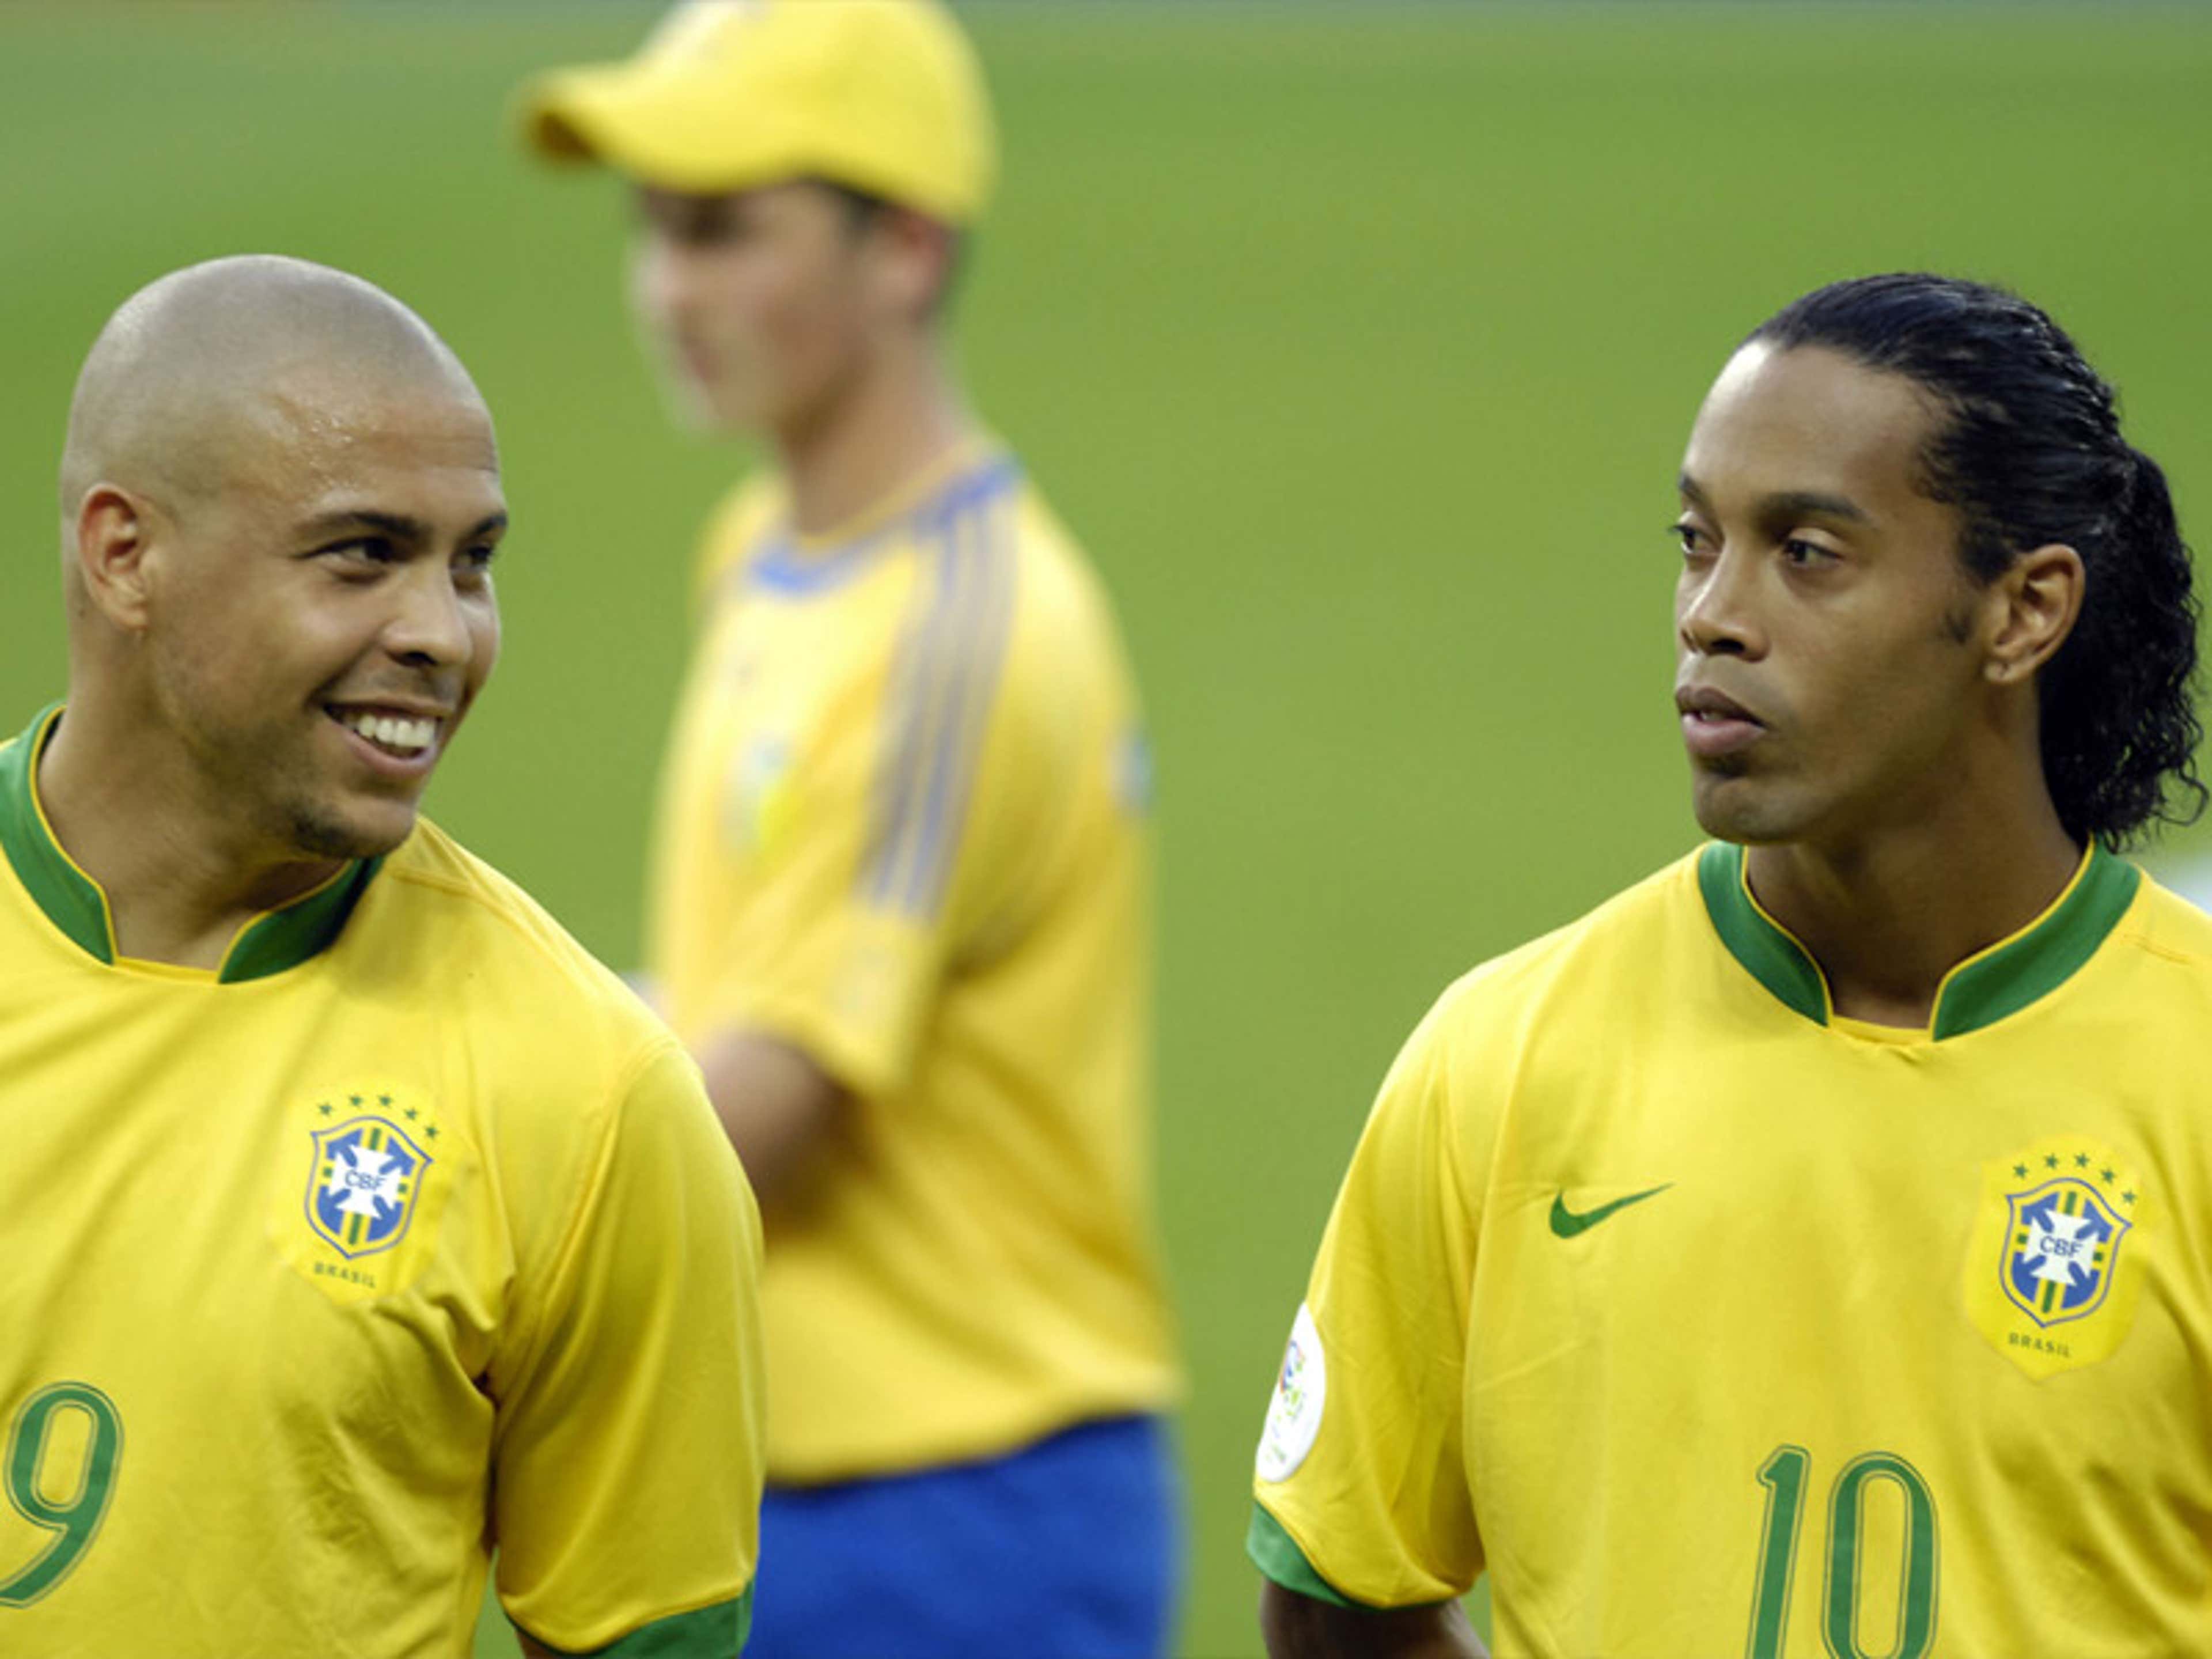 Brazil Team Of The Decade 2000-2010